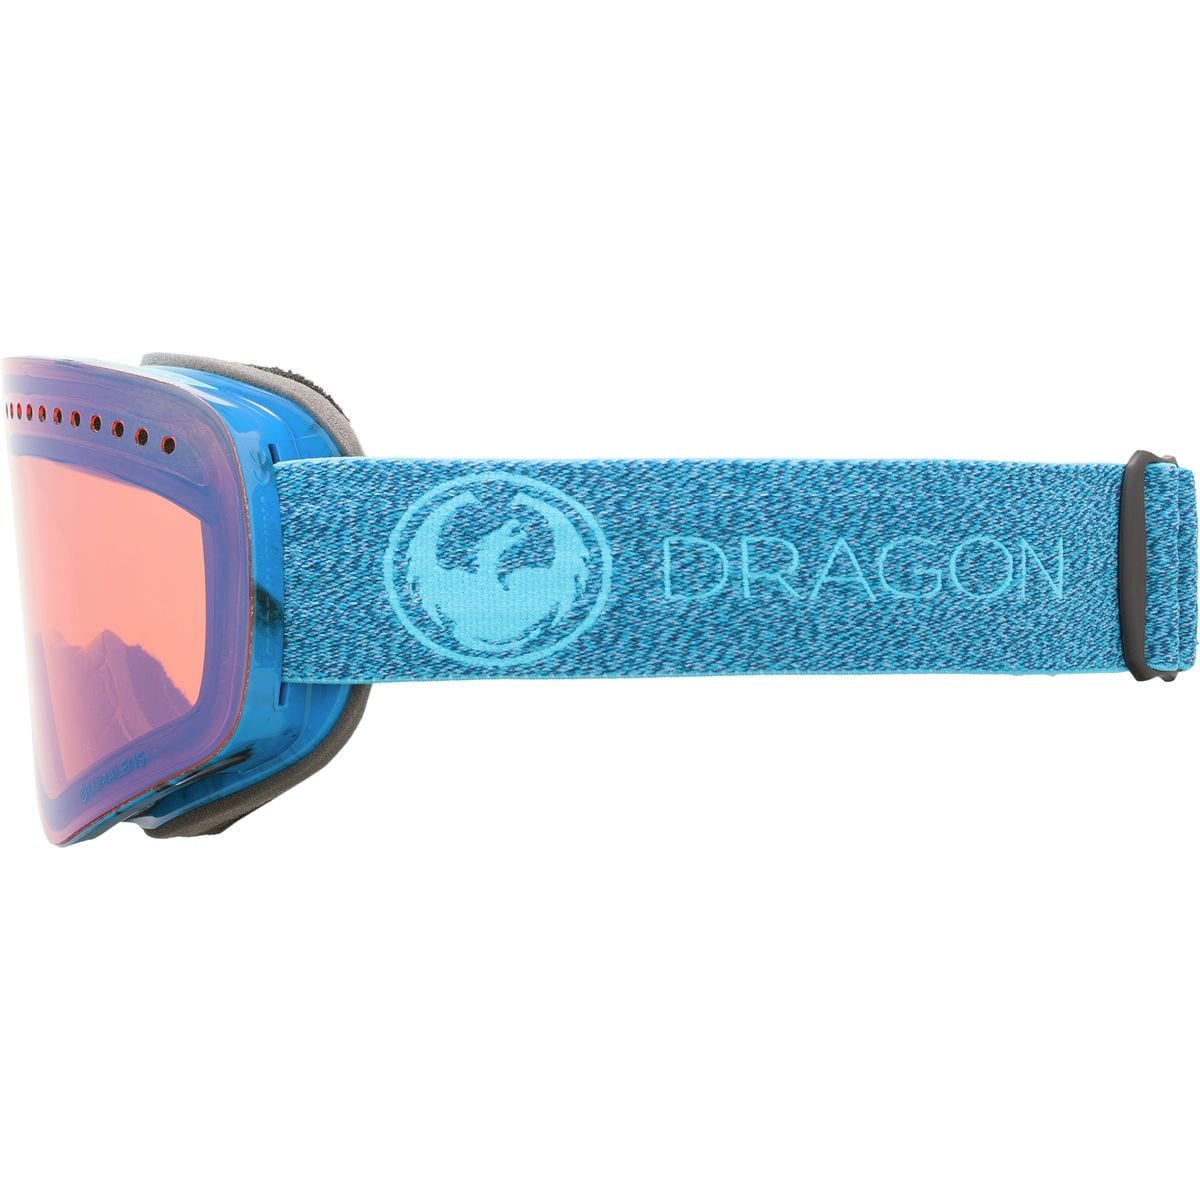 Dragon NFX Goggles | Backcountry.com